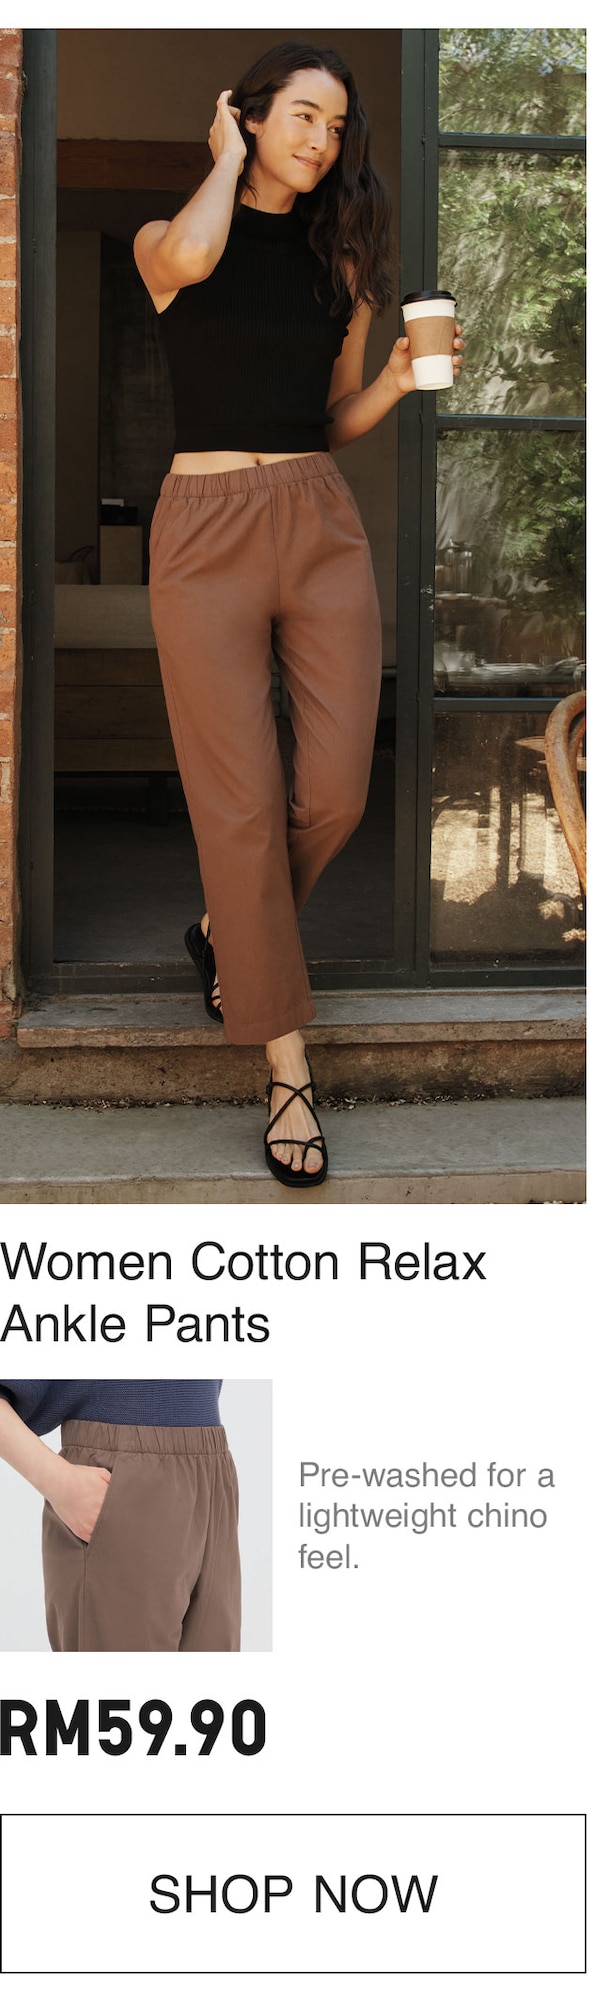 WOMEN COTTON RELAX ANKLE PANTS